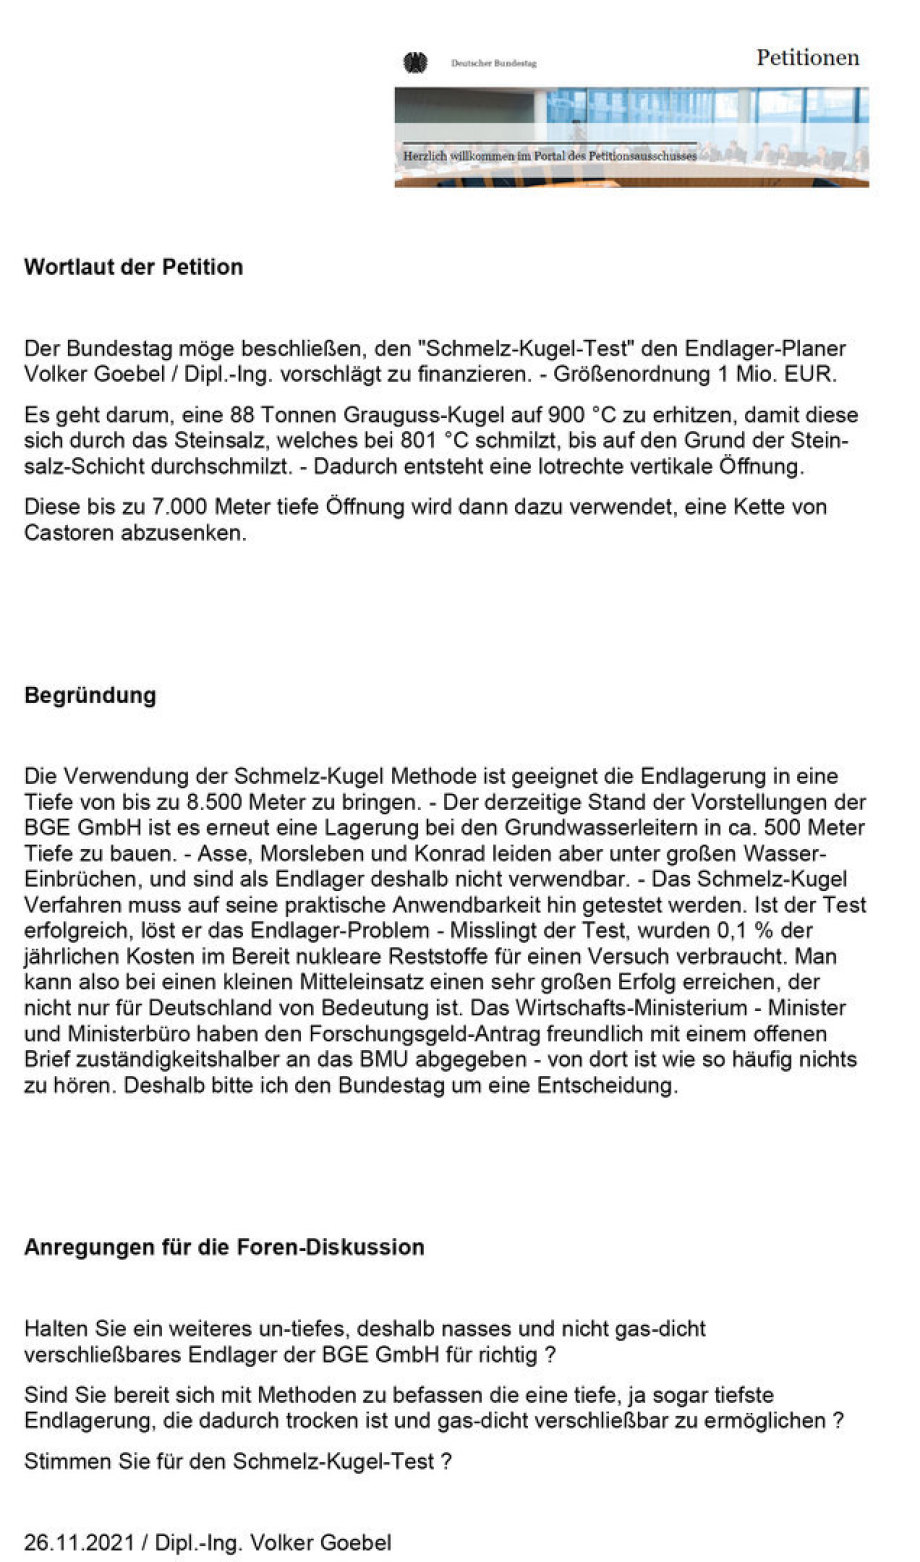 Text Petition Bundestag - Schmelz-Kugel-Test